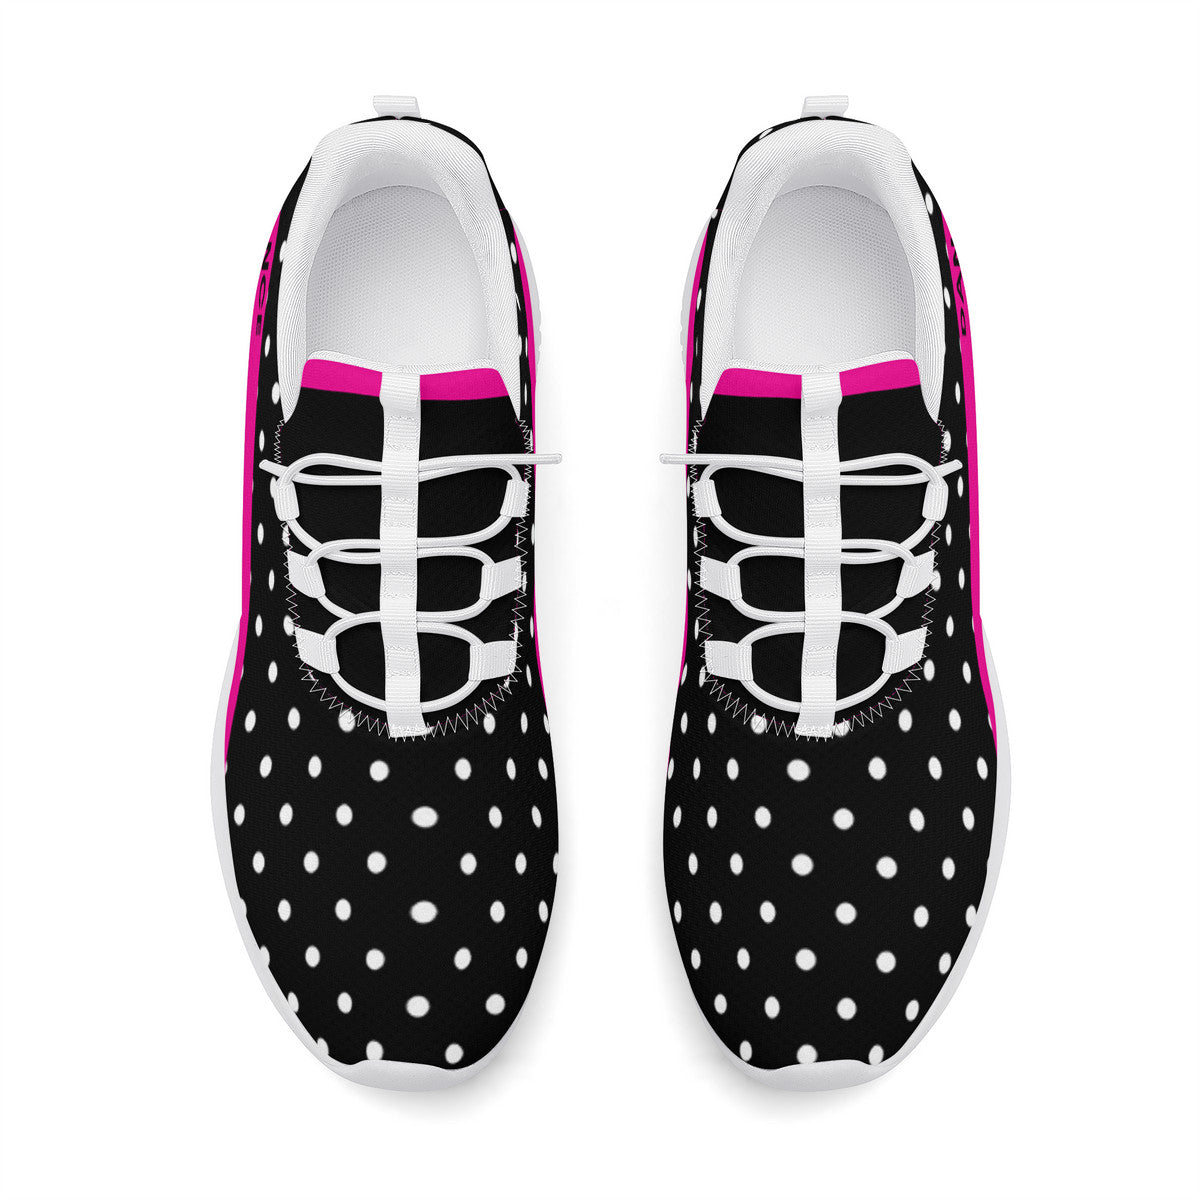 Dance Sneakers - Polka Dots - Black